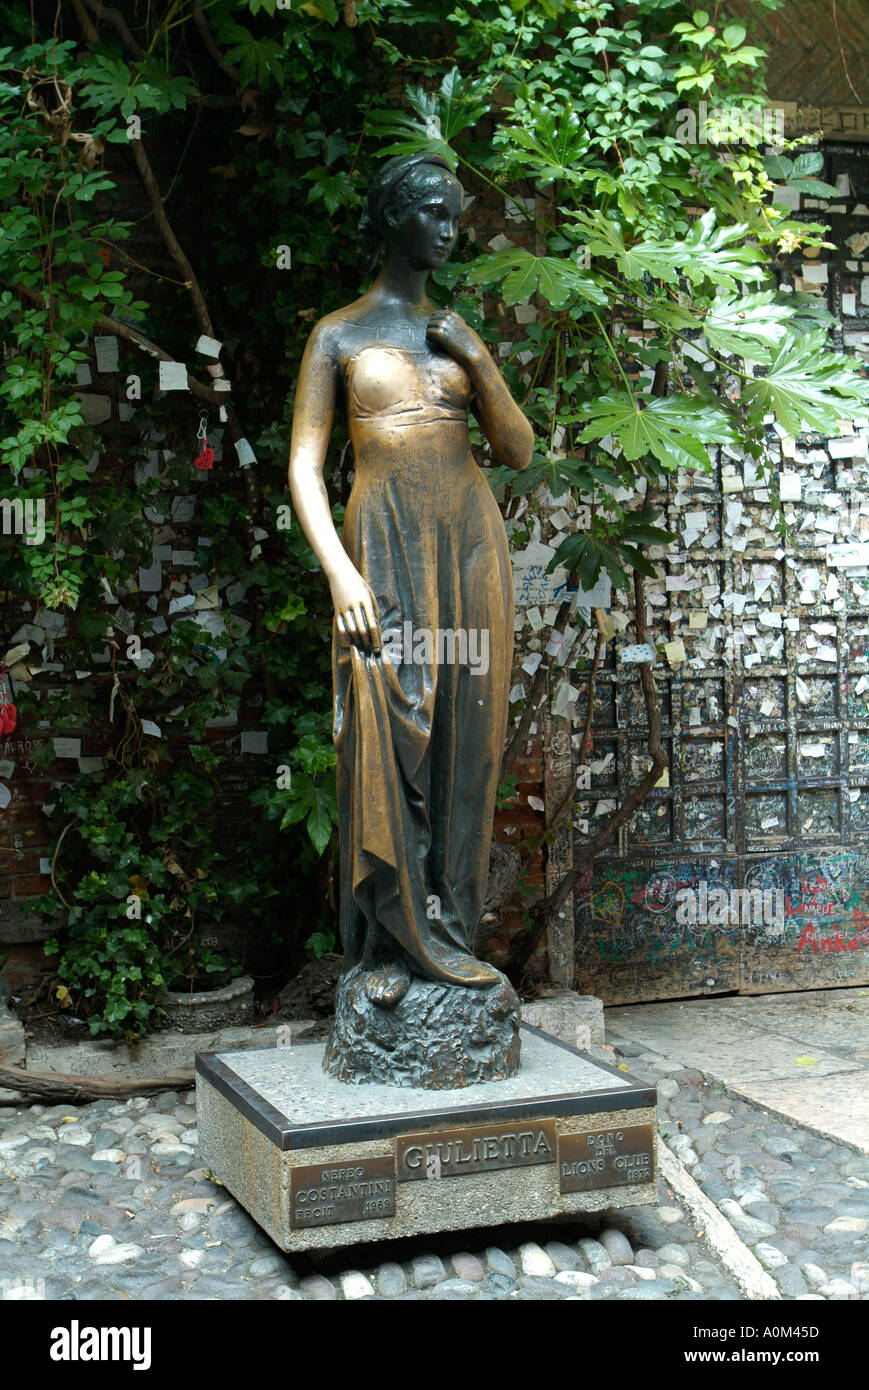 Statue of Juliet Casa di Giulietta supposed home of Sheakspears Juliet  Verona Italy Stock Photo - Alamy